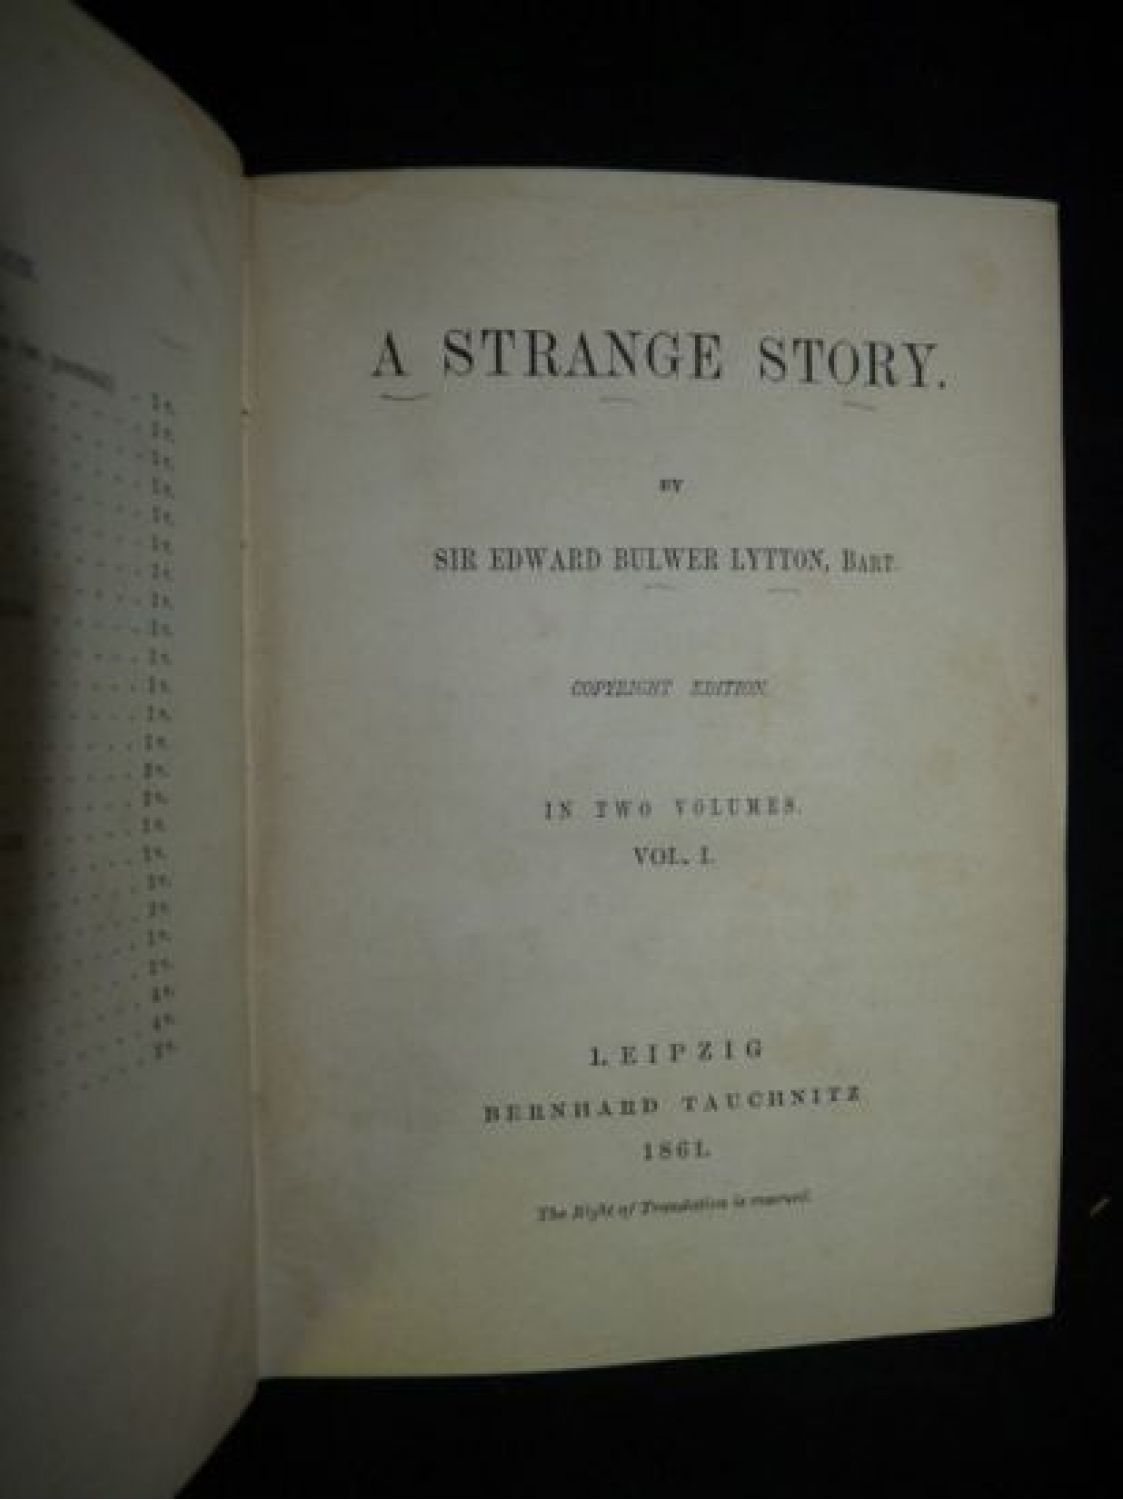 edward bulwer-lytton a strange story